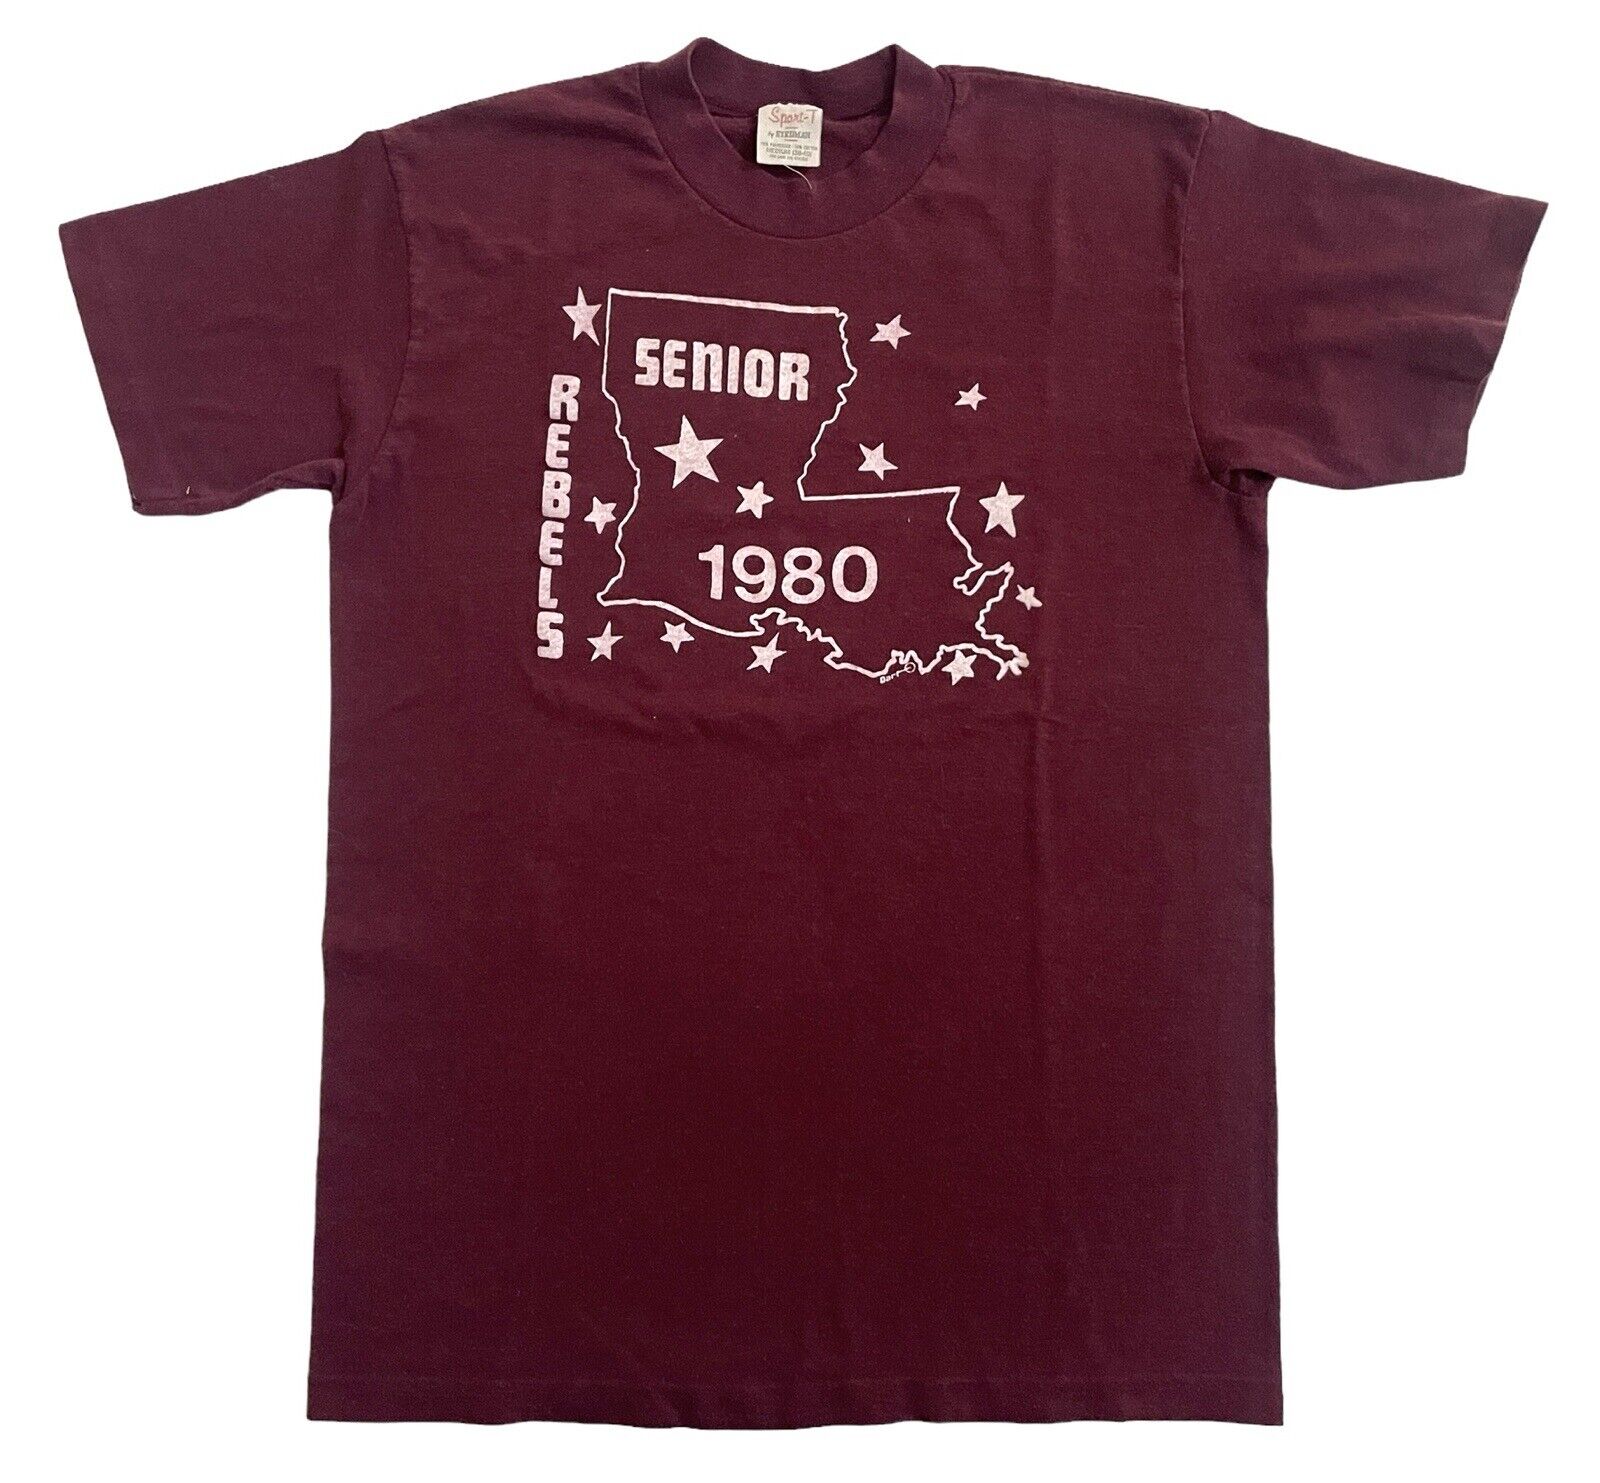 Vintage 1980 Pineville High Rebels Senior Louisiana Maroon Medium T Shirt 50/50